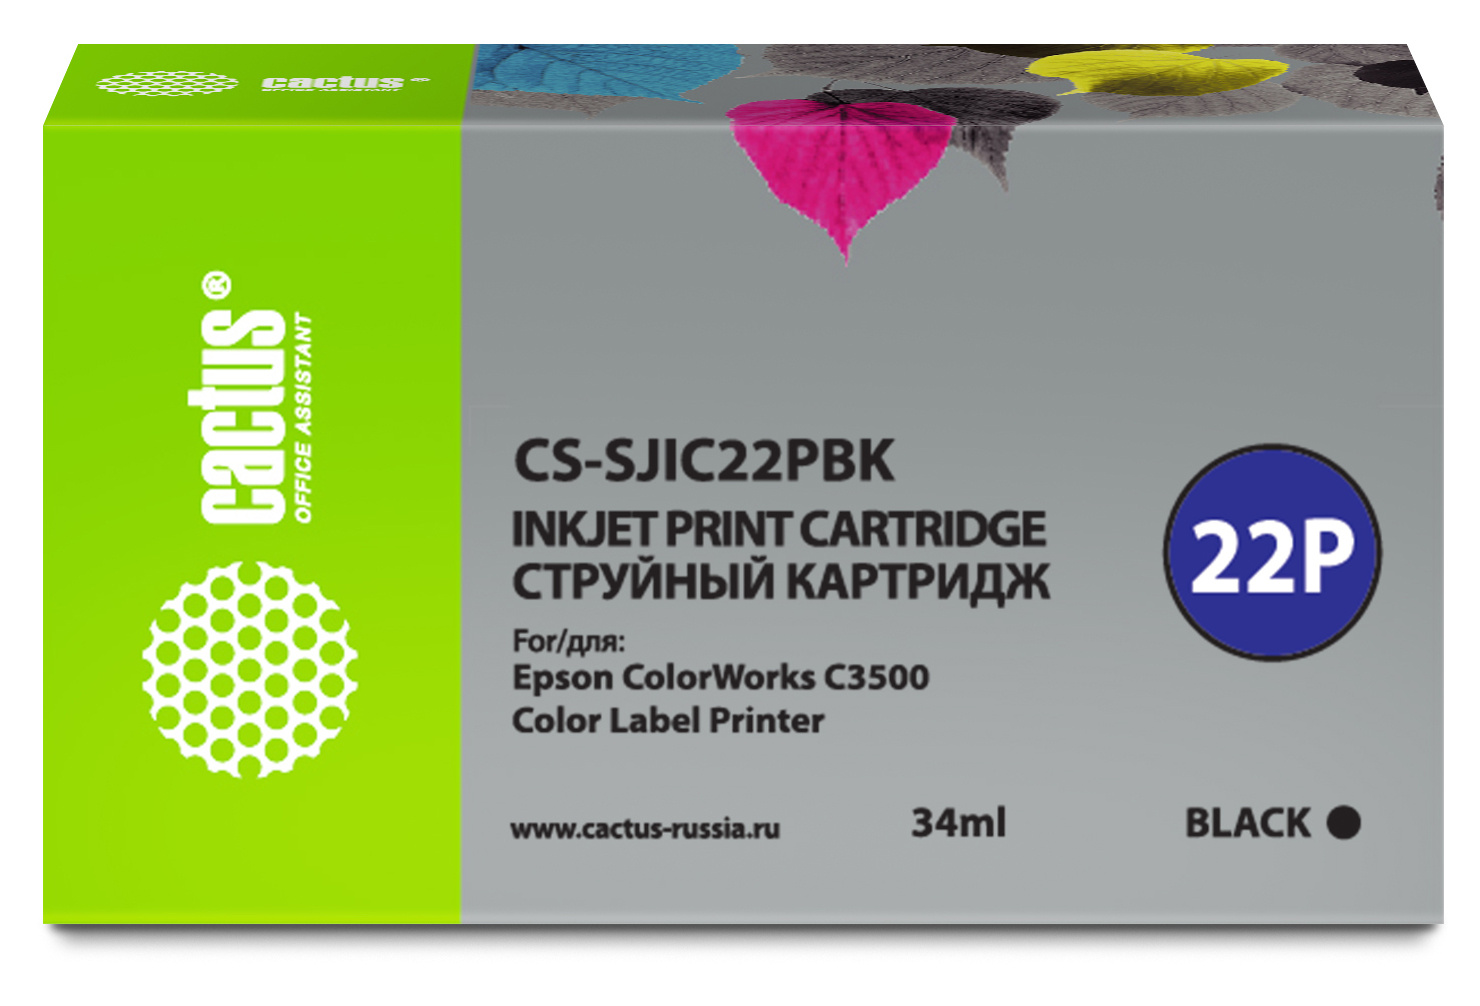   Cactus CS-SJIC22PBK C33S020601  (34)  Epson ColorWorks C3500